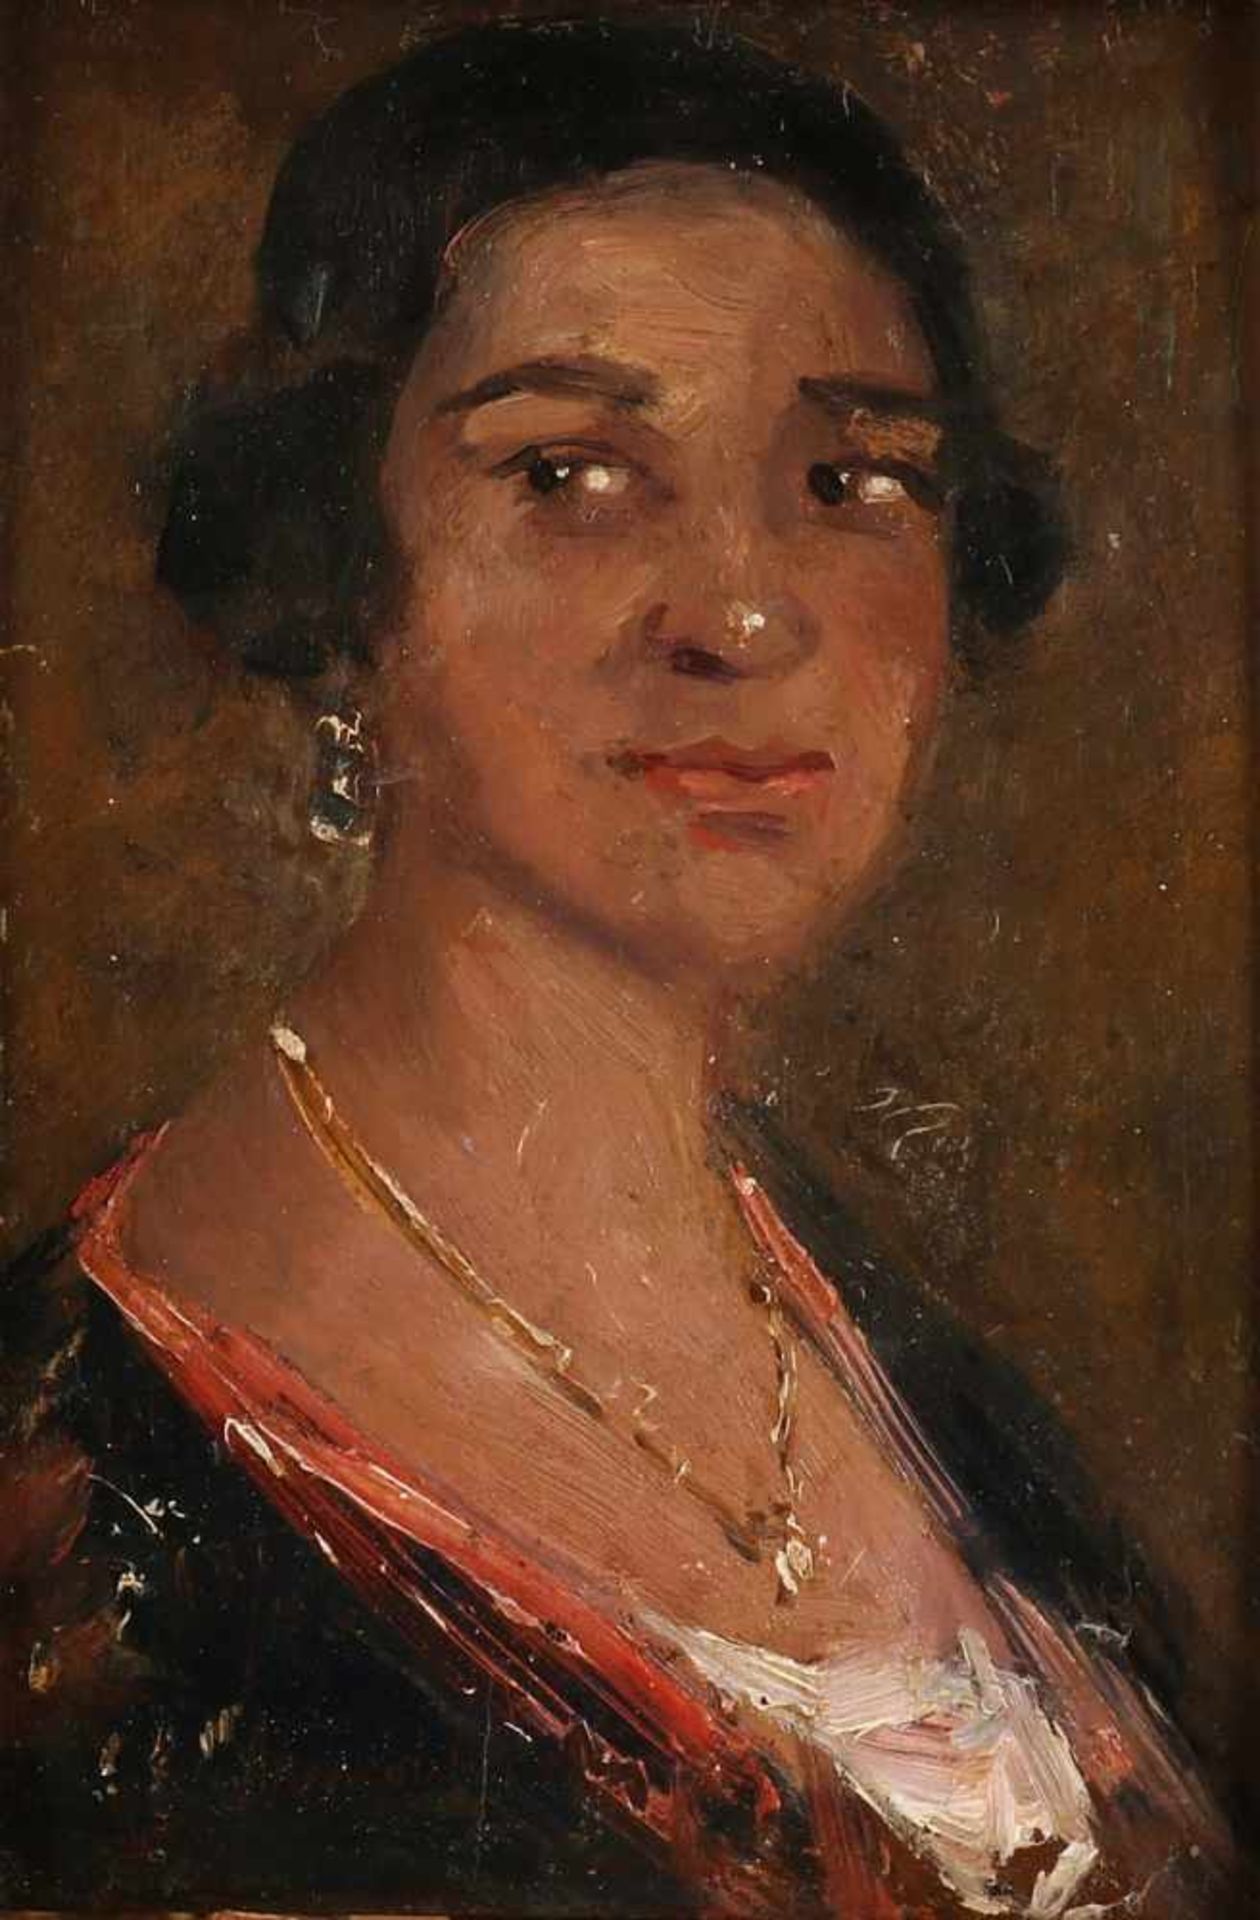 Simon Maris. 1873 - 1935. Black lady with jewelry. Oil paint on panel. Size: H 21.5 x W 15.5 cm.